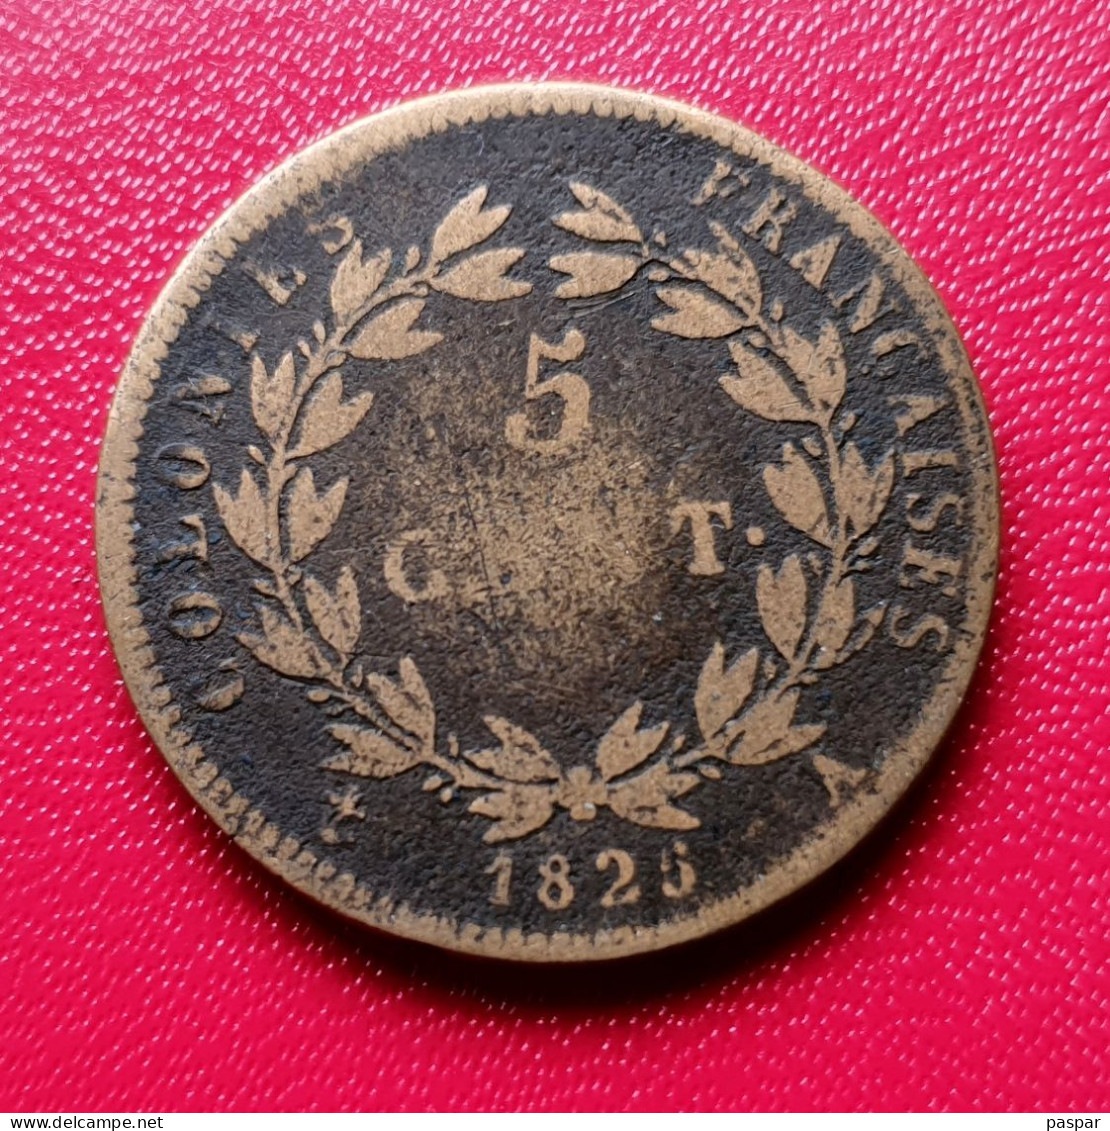 5 Centimes 1825 A  Colonies Françaises Charles X - Colonie Francesi (1817-1844)